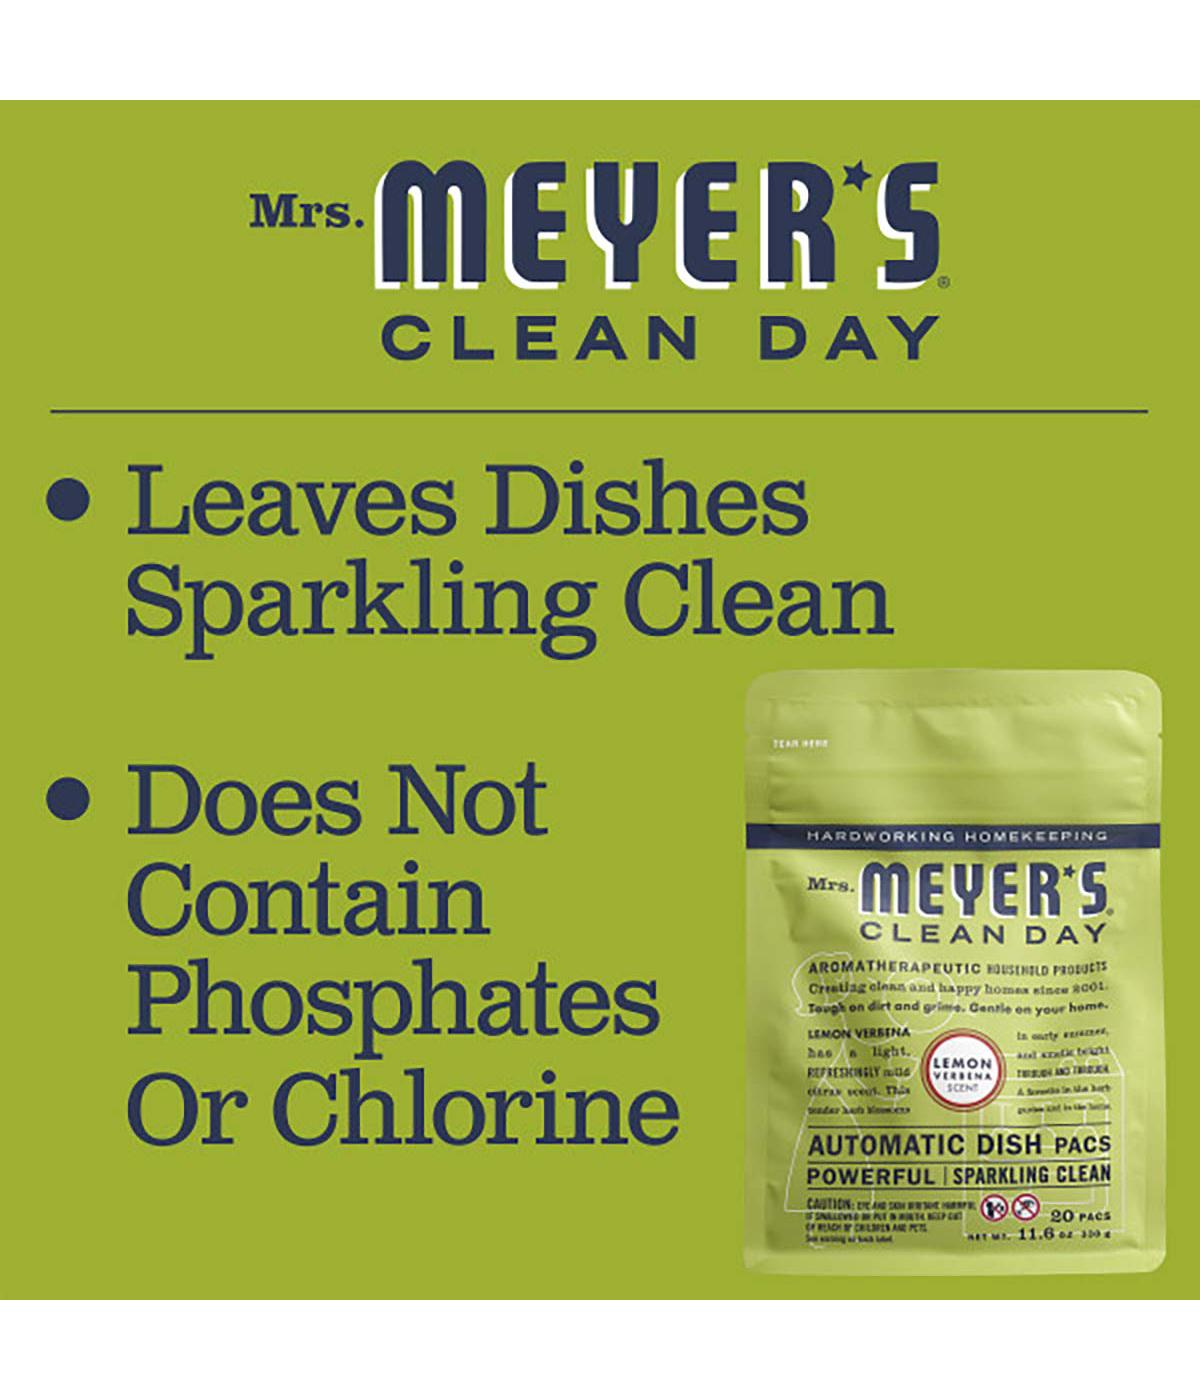 Mrs. Meyer's Clean Day Lemon Verbena Automatic Dish Packs; image 2 of 2